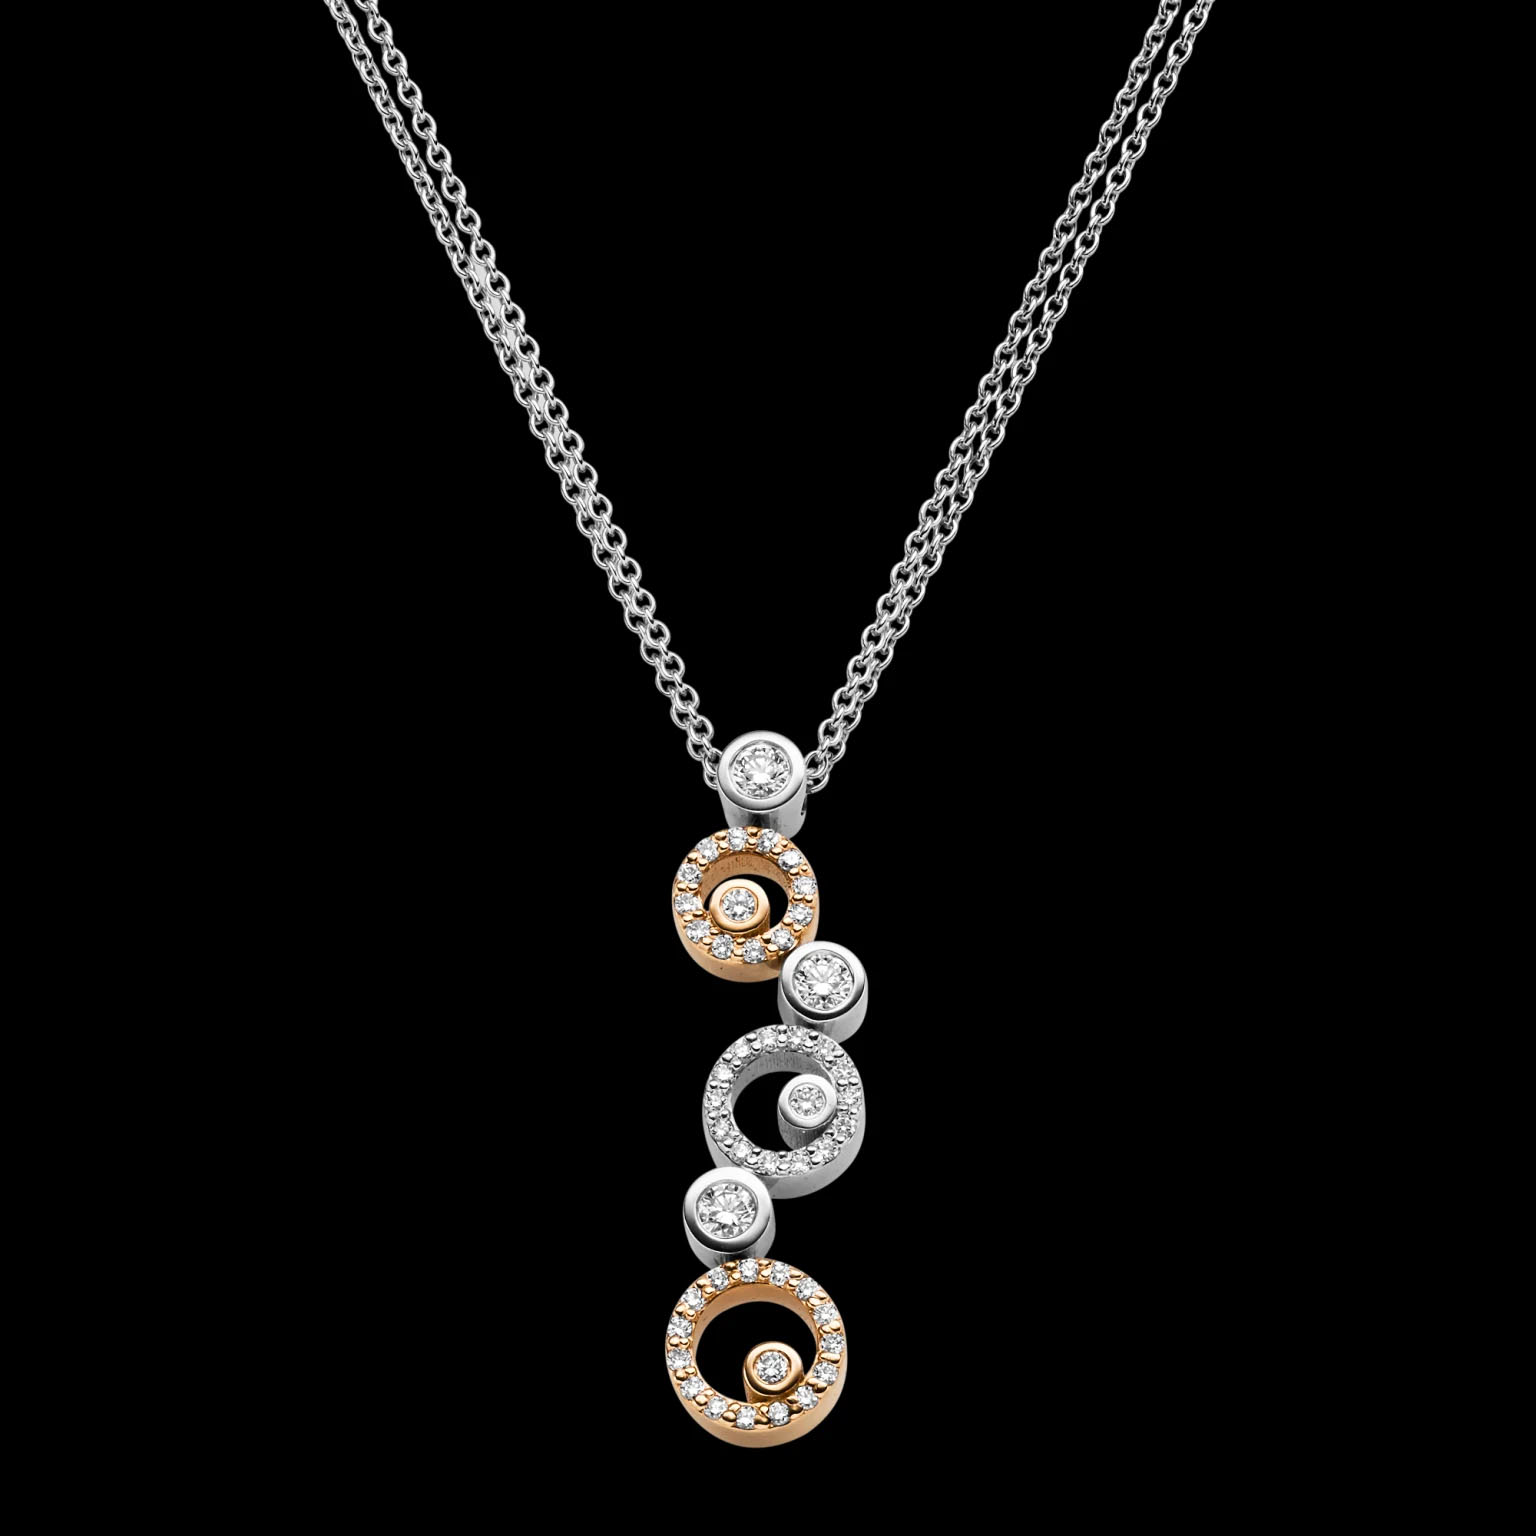 Custom made sterling silver CZ pendant by custom jewelry designer